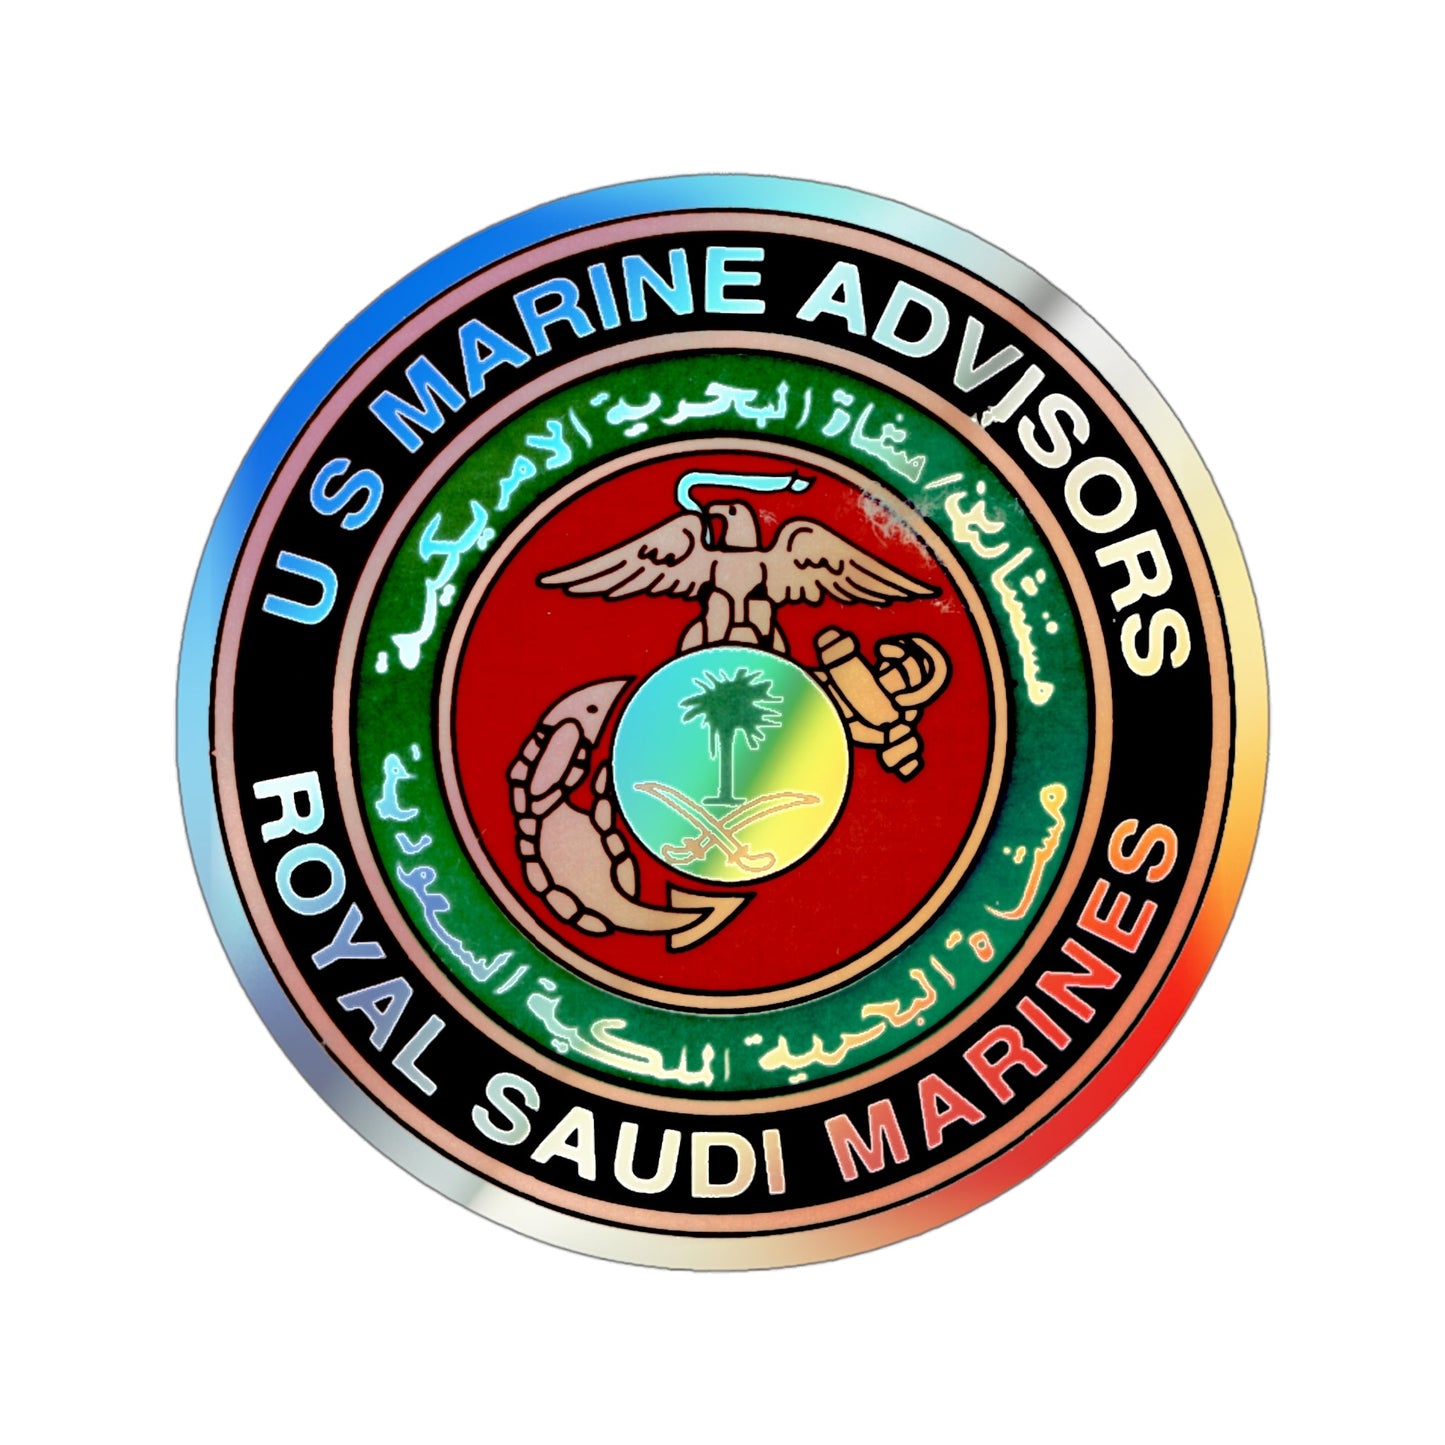 US Marine Ad Royal Saudi Marines (USMC) Holographic STICKER Die-Cut Vinyl Decal-4 Inch-The Sticker Space